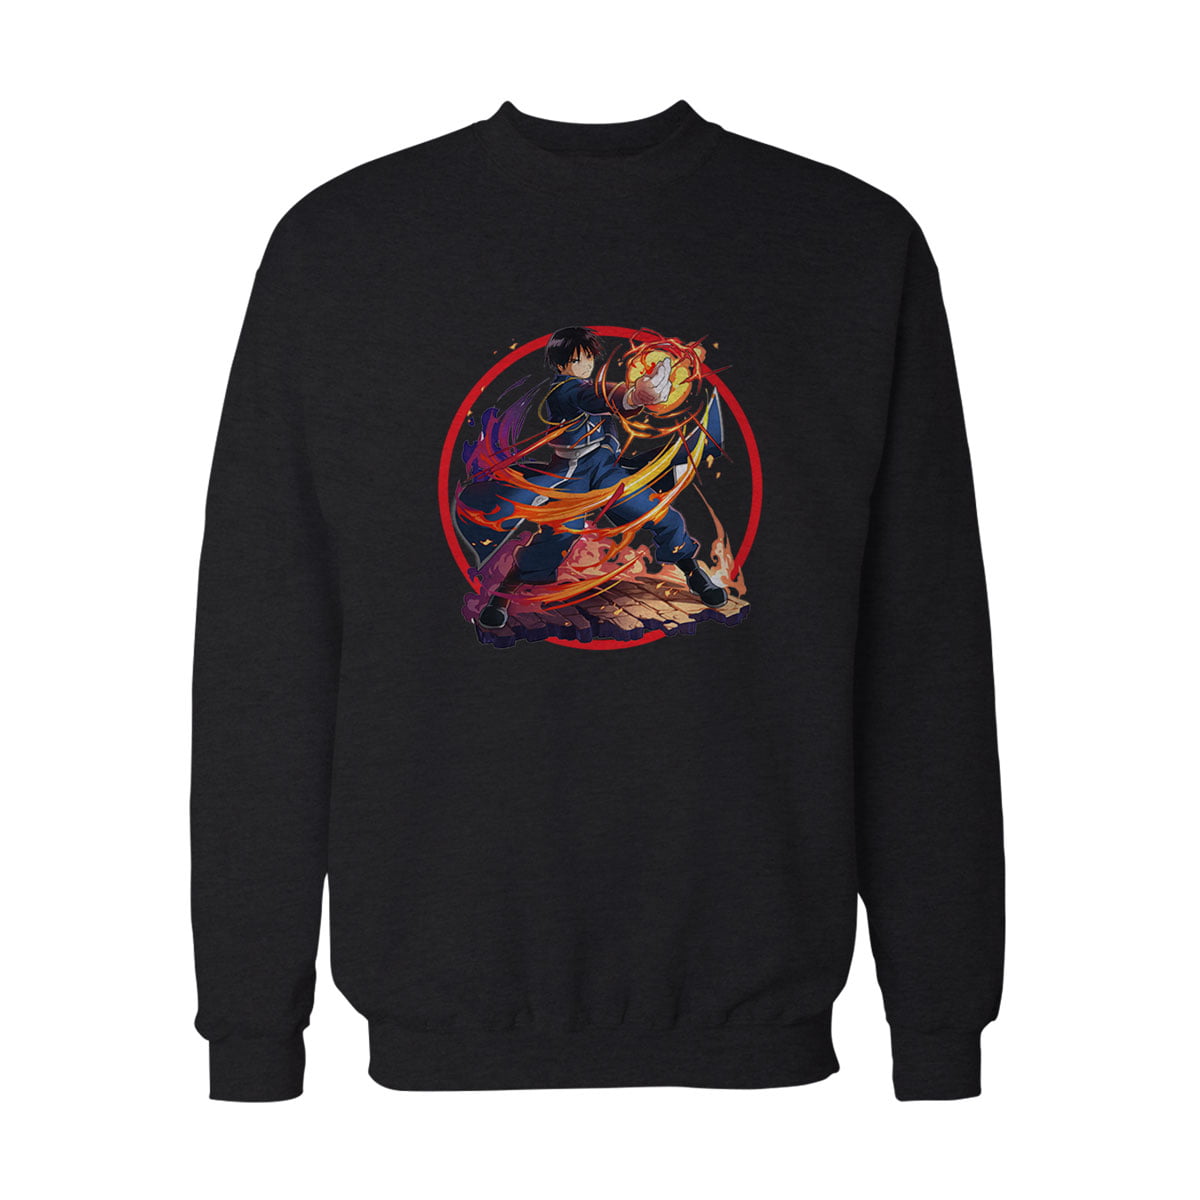 Fullmetal Alchemist No6 Sweatshirt S